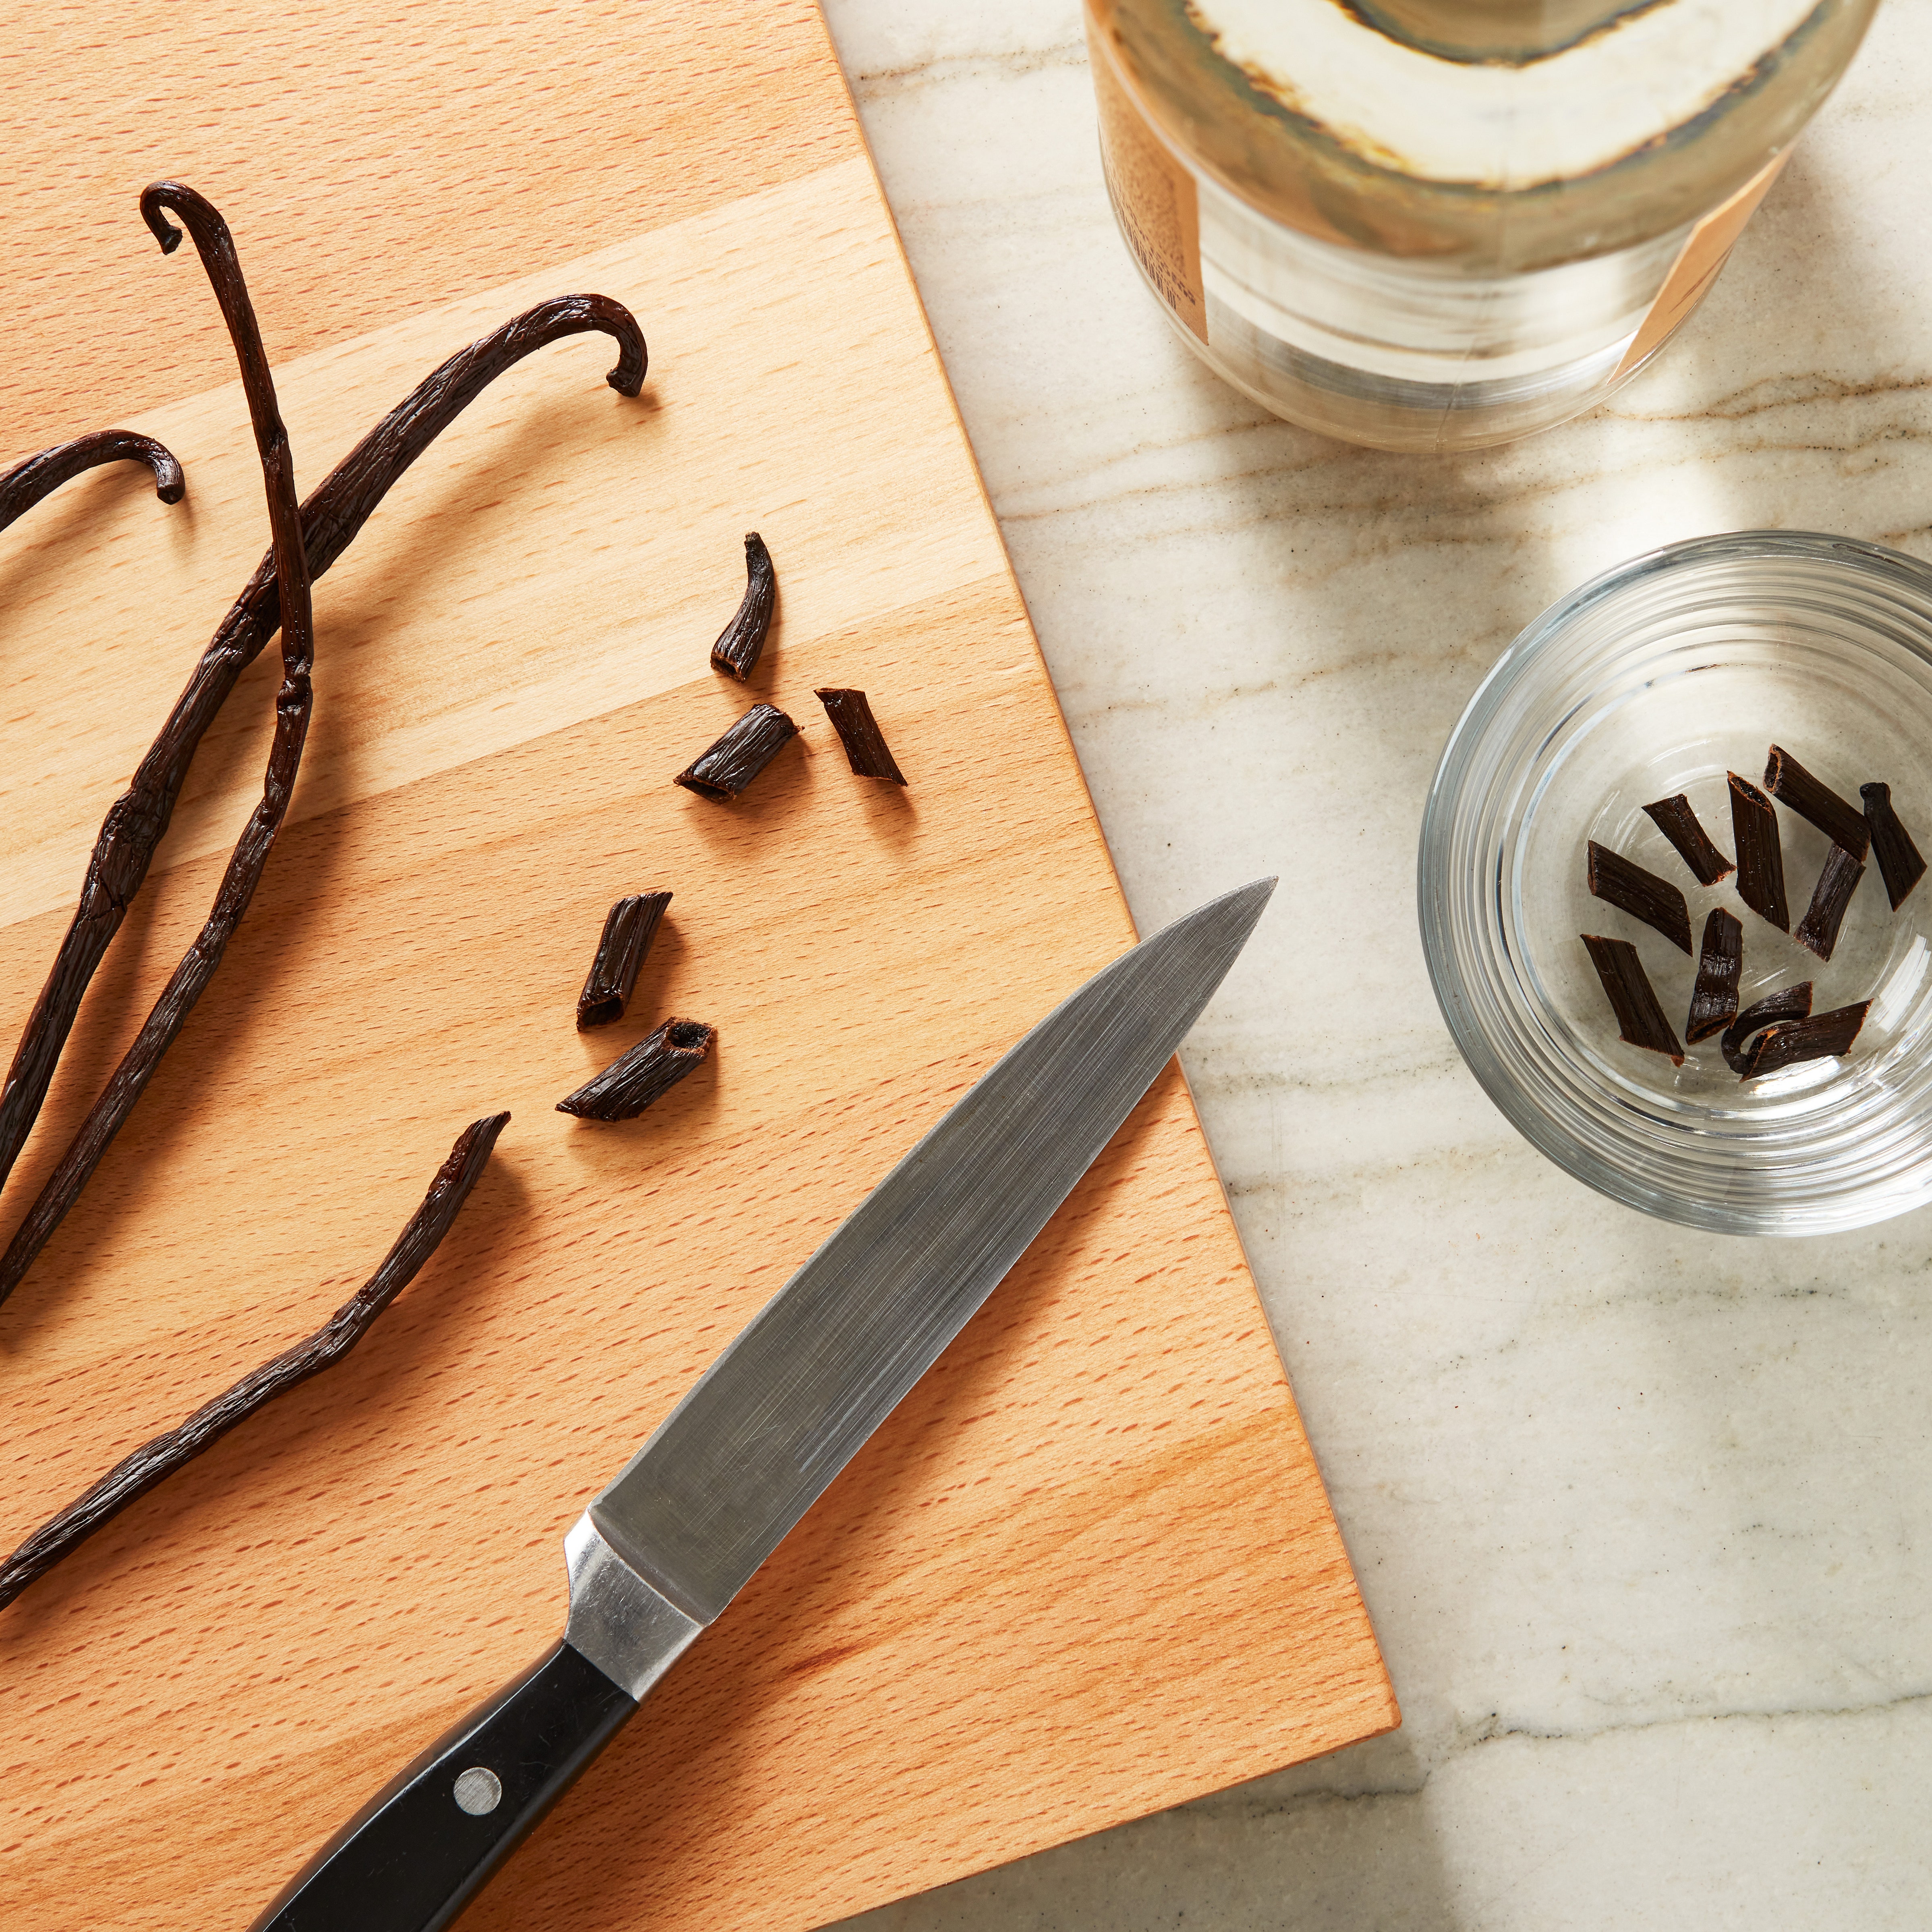 Should You Make Homemade Vanilla Extract?